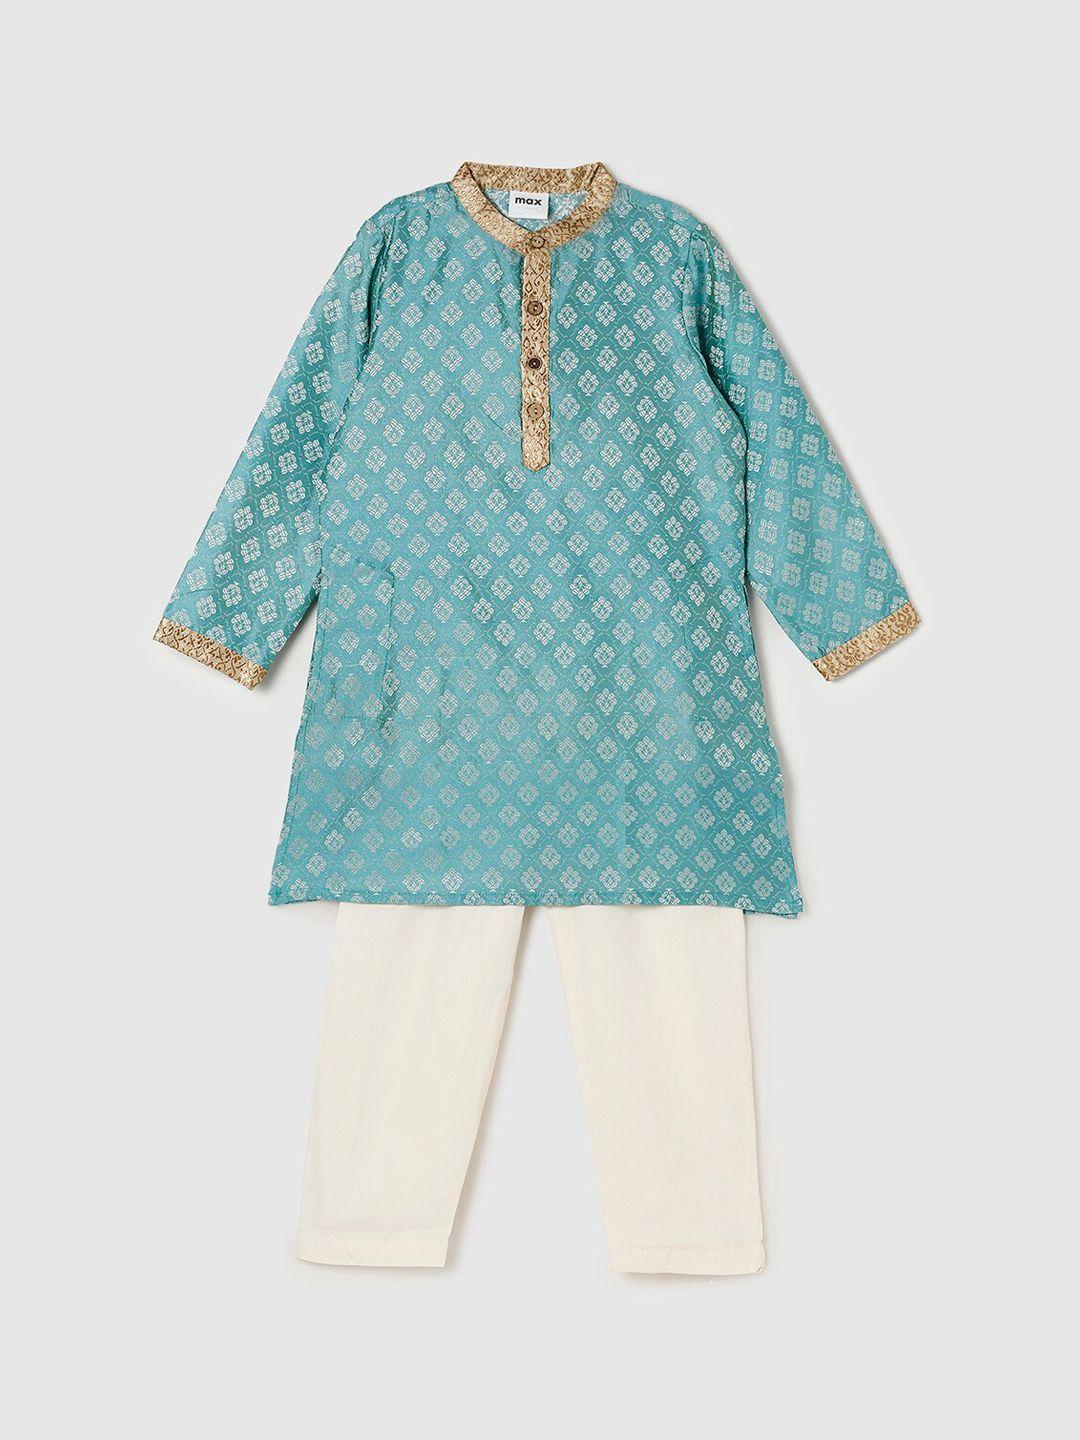 max-mandarin-collar-kurta-with-trousers